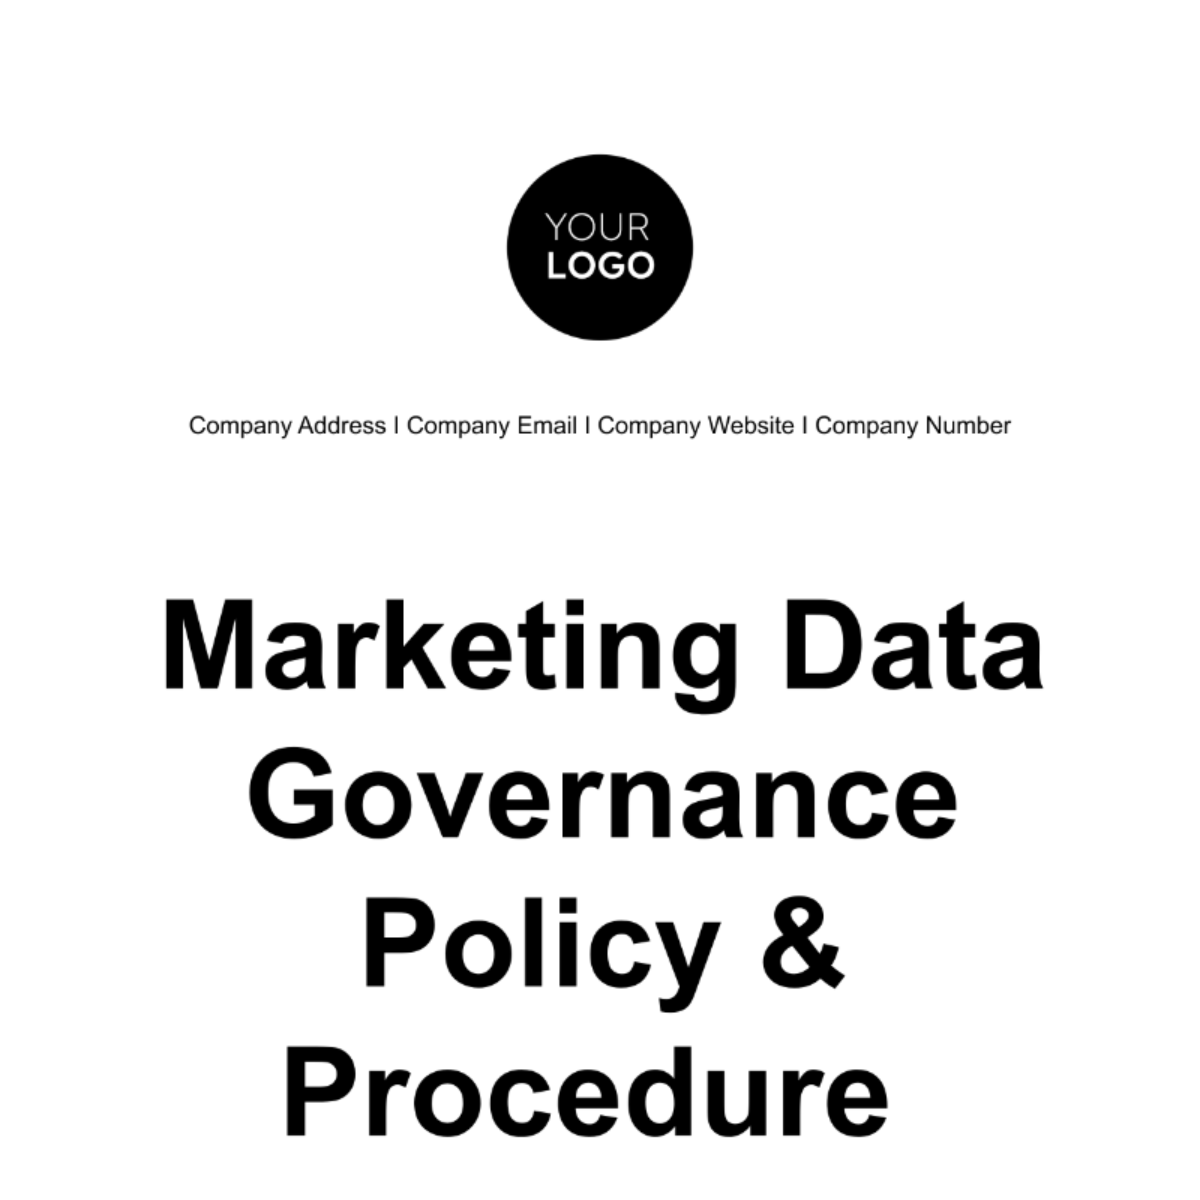 Free Marketing Data Governance Policy & Procedure Template